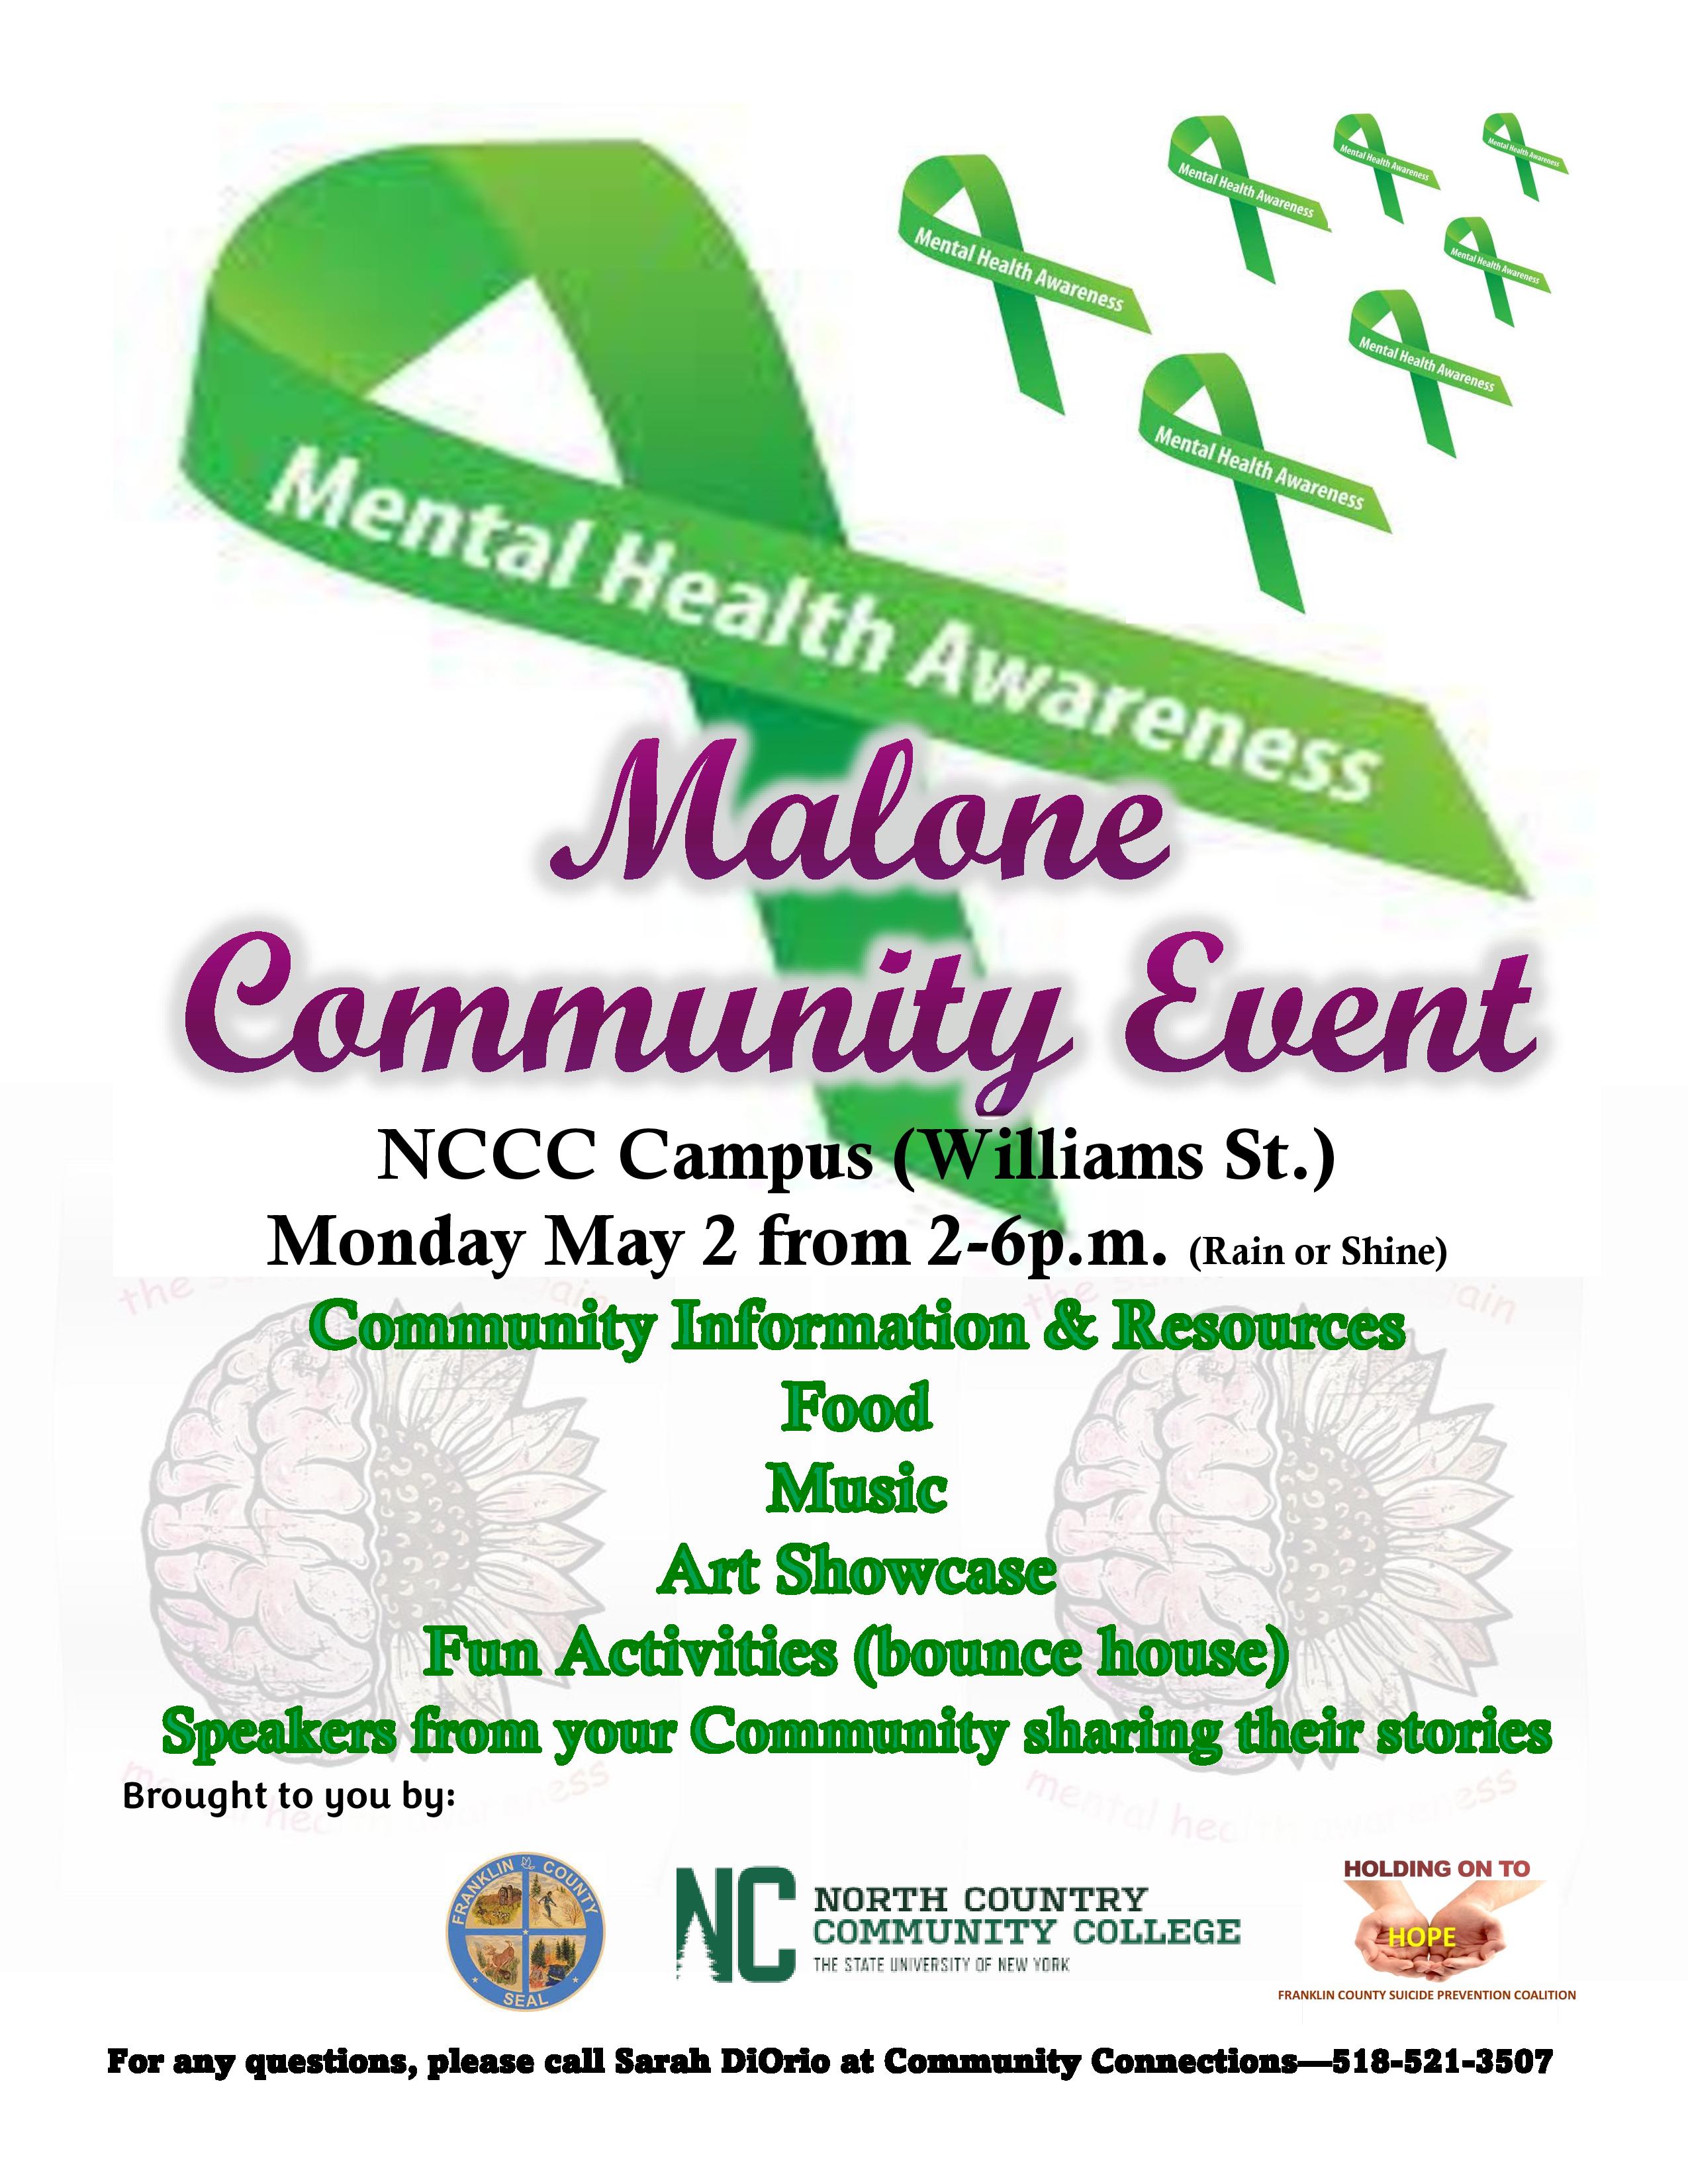 Mental Health Awareness Community Event - Malone